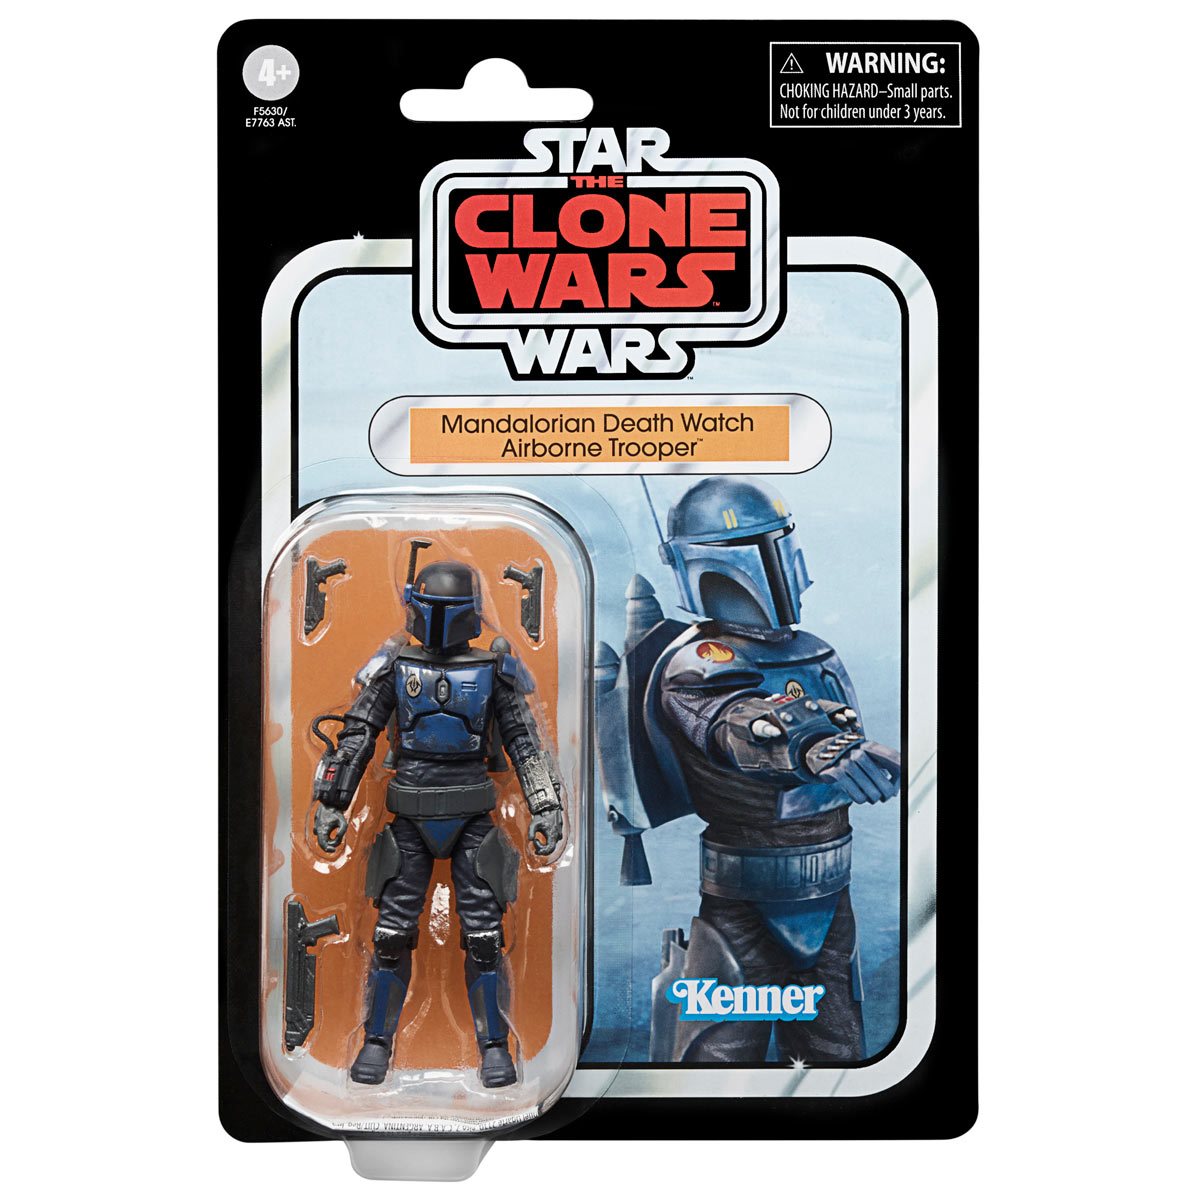 Star Wars: The Clone Wars - Mandalorian Death Watch Airborne Trooper Action Figure